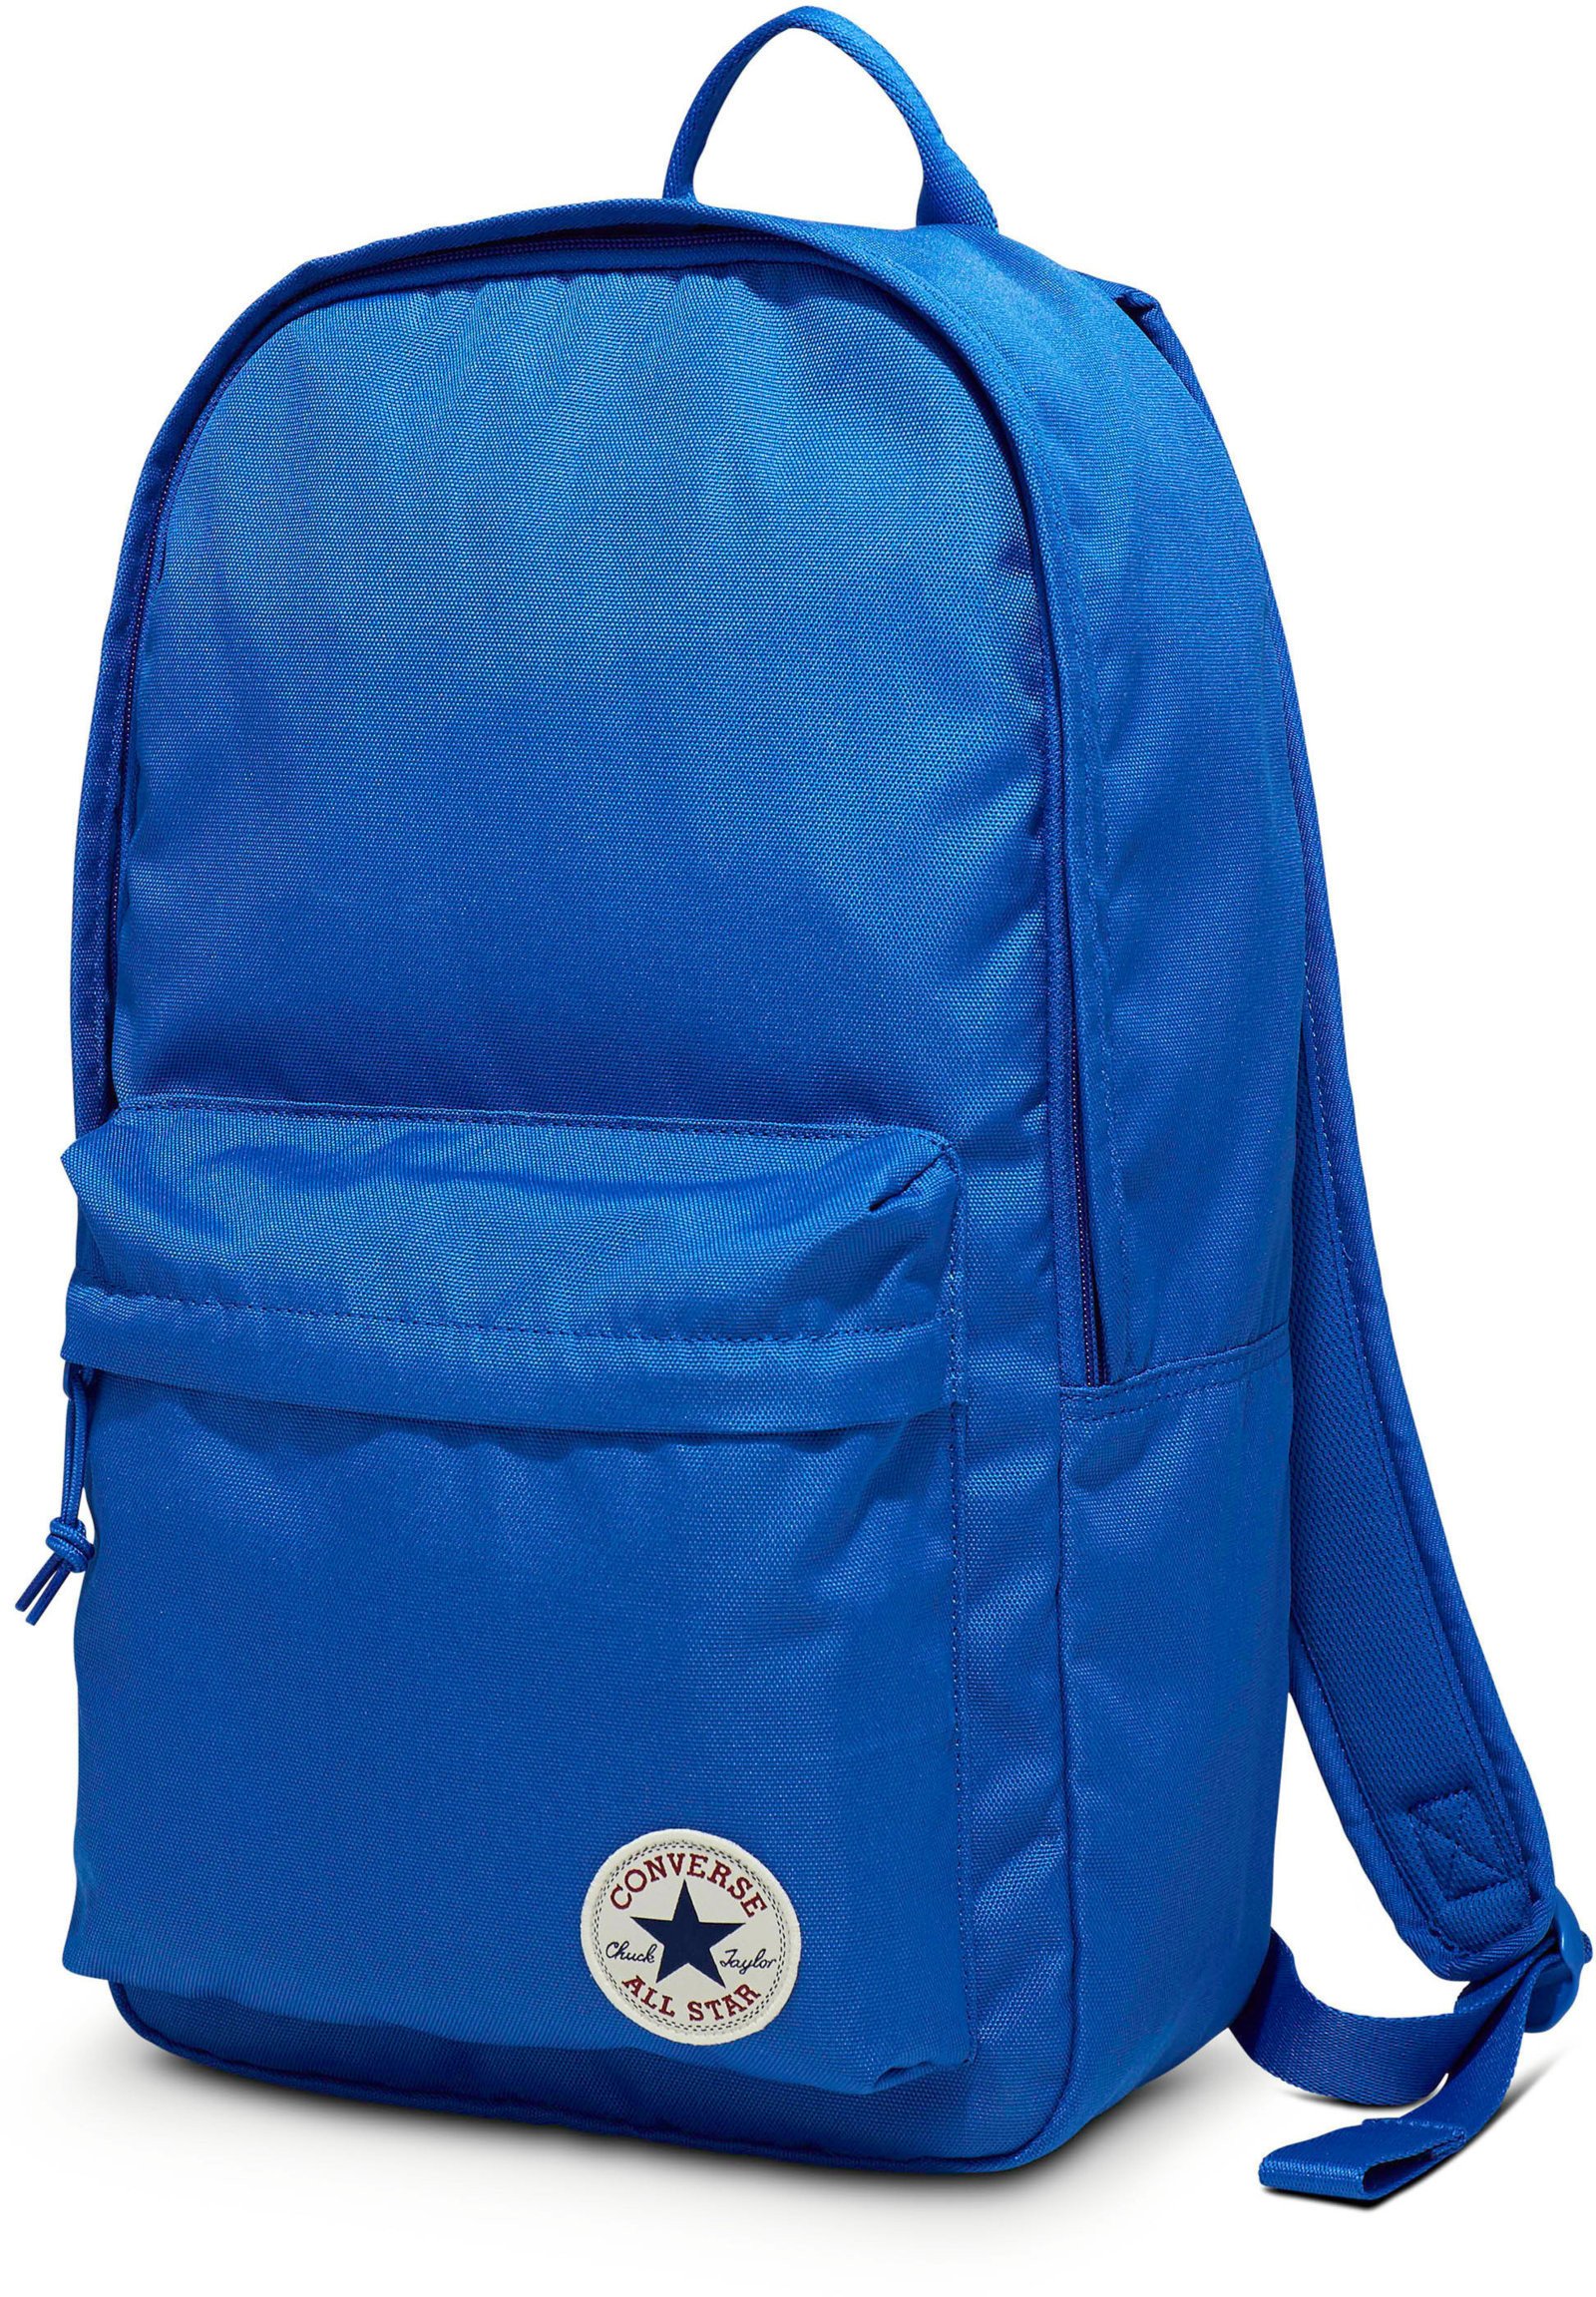 blue converse rucksack